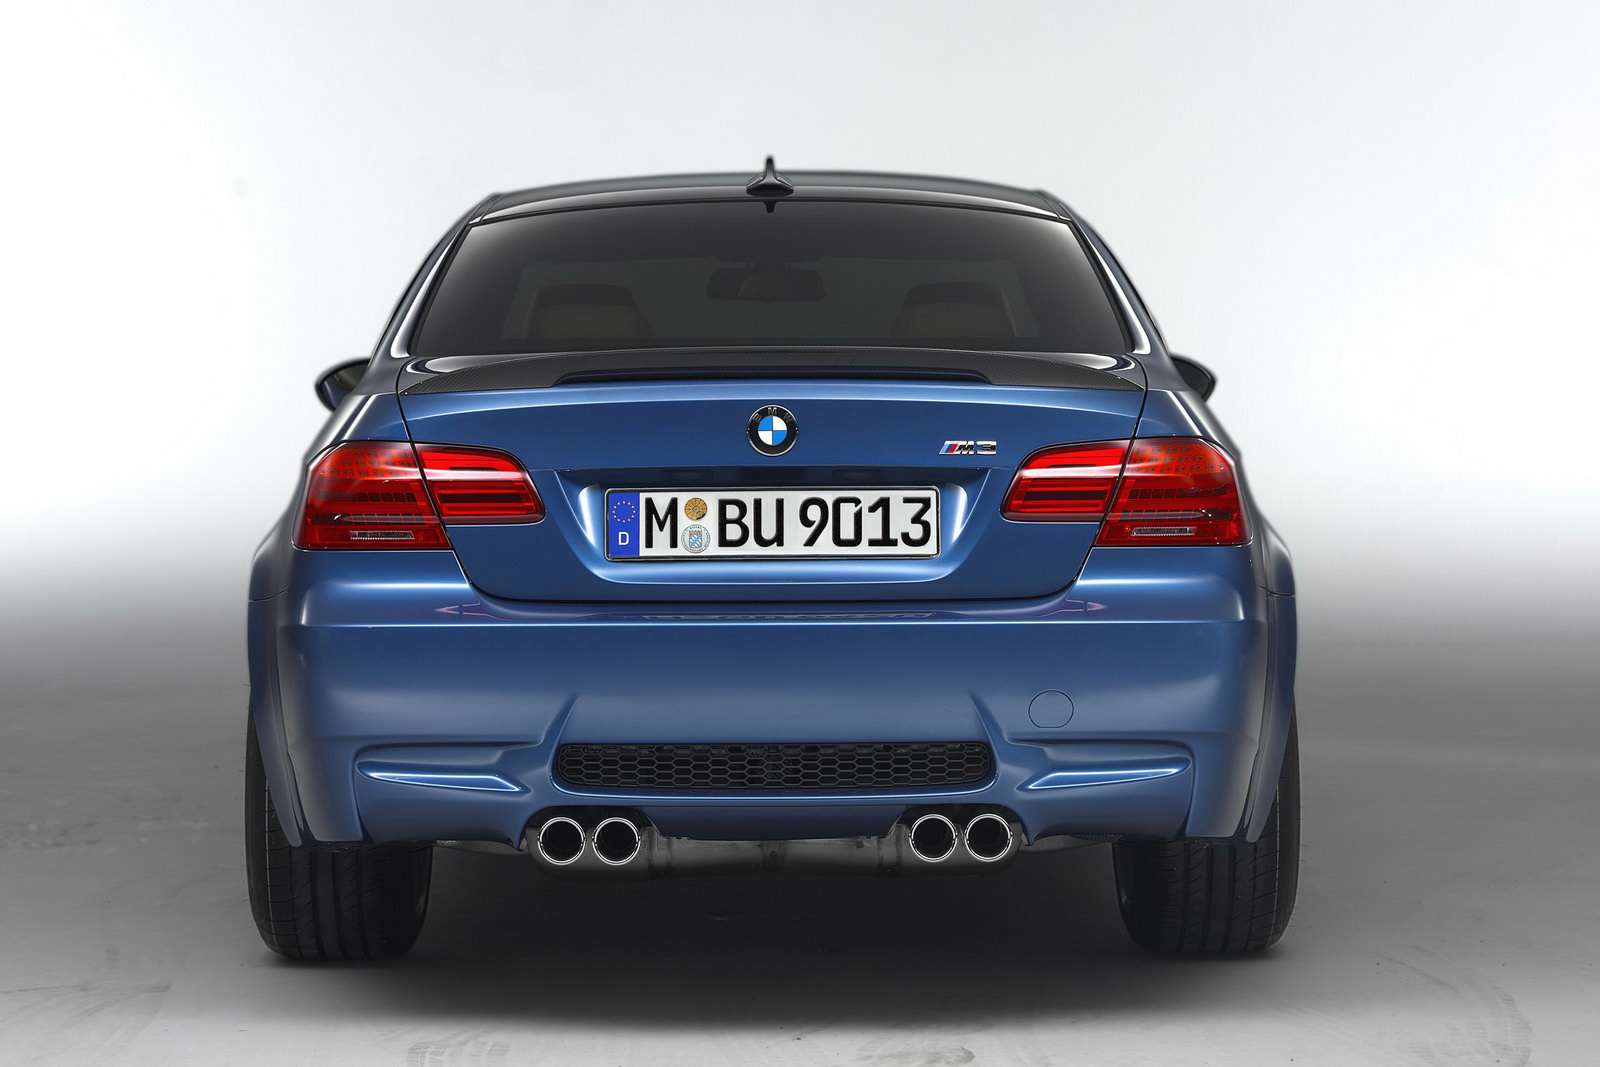 BMW M3 2011 po facelifcie z systemem StartStop [FOT